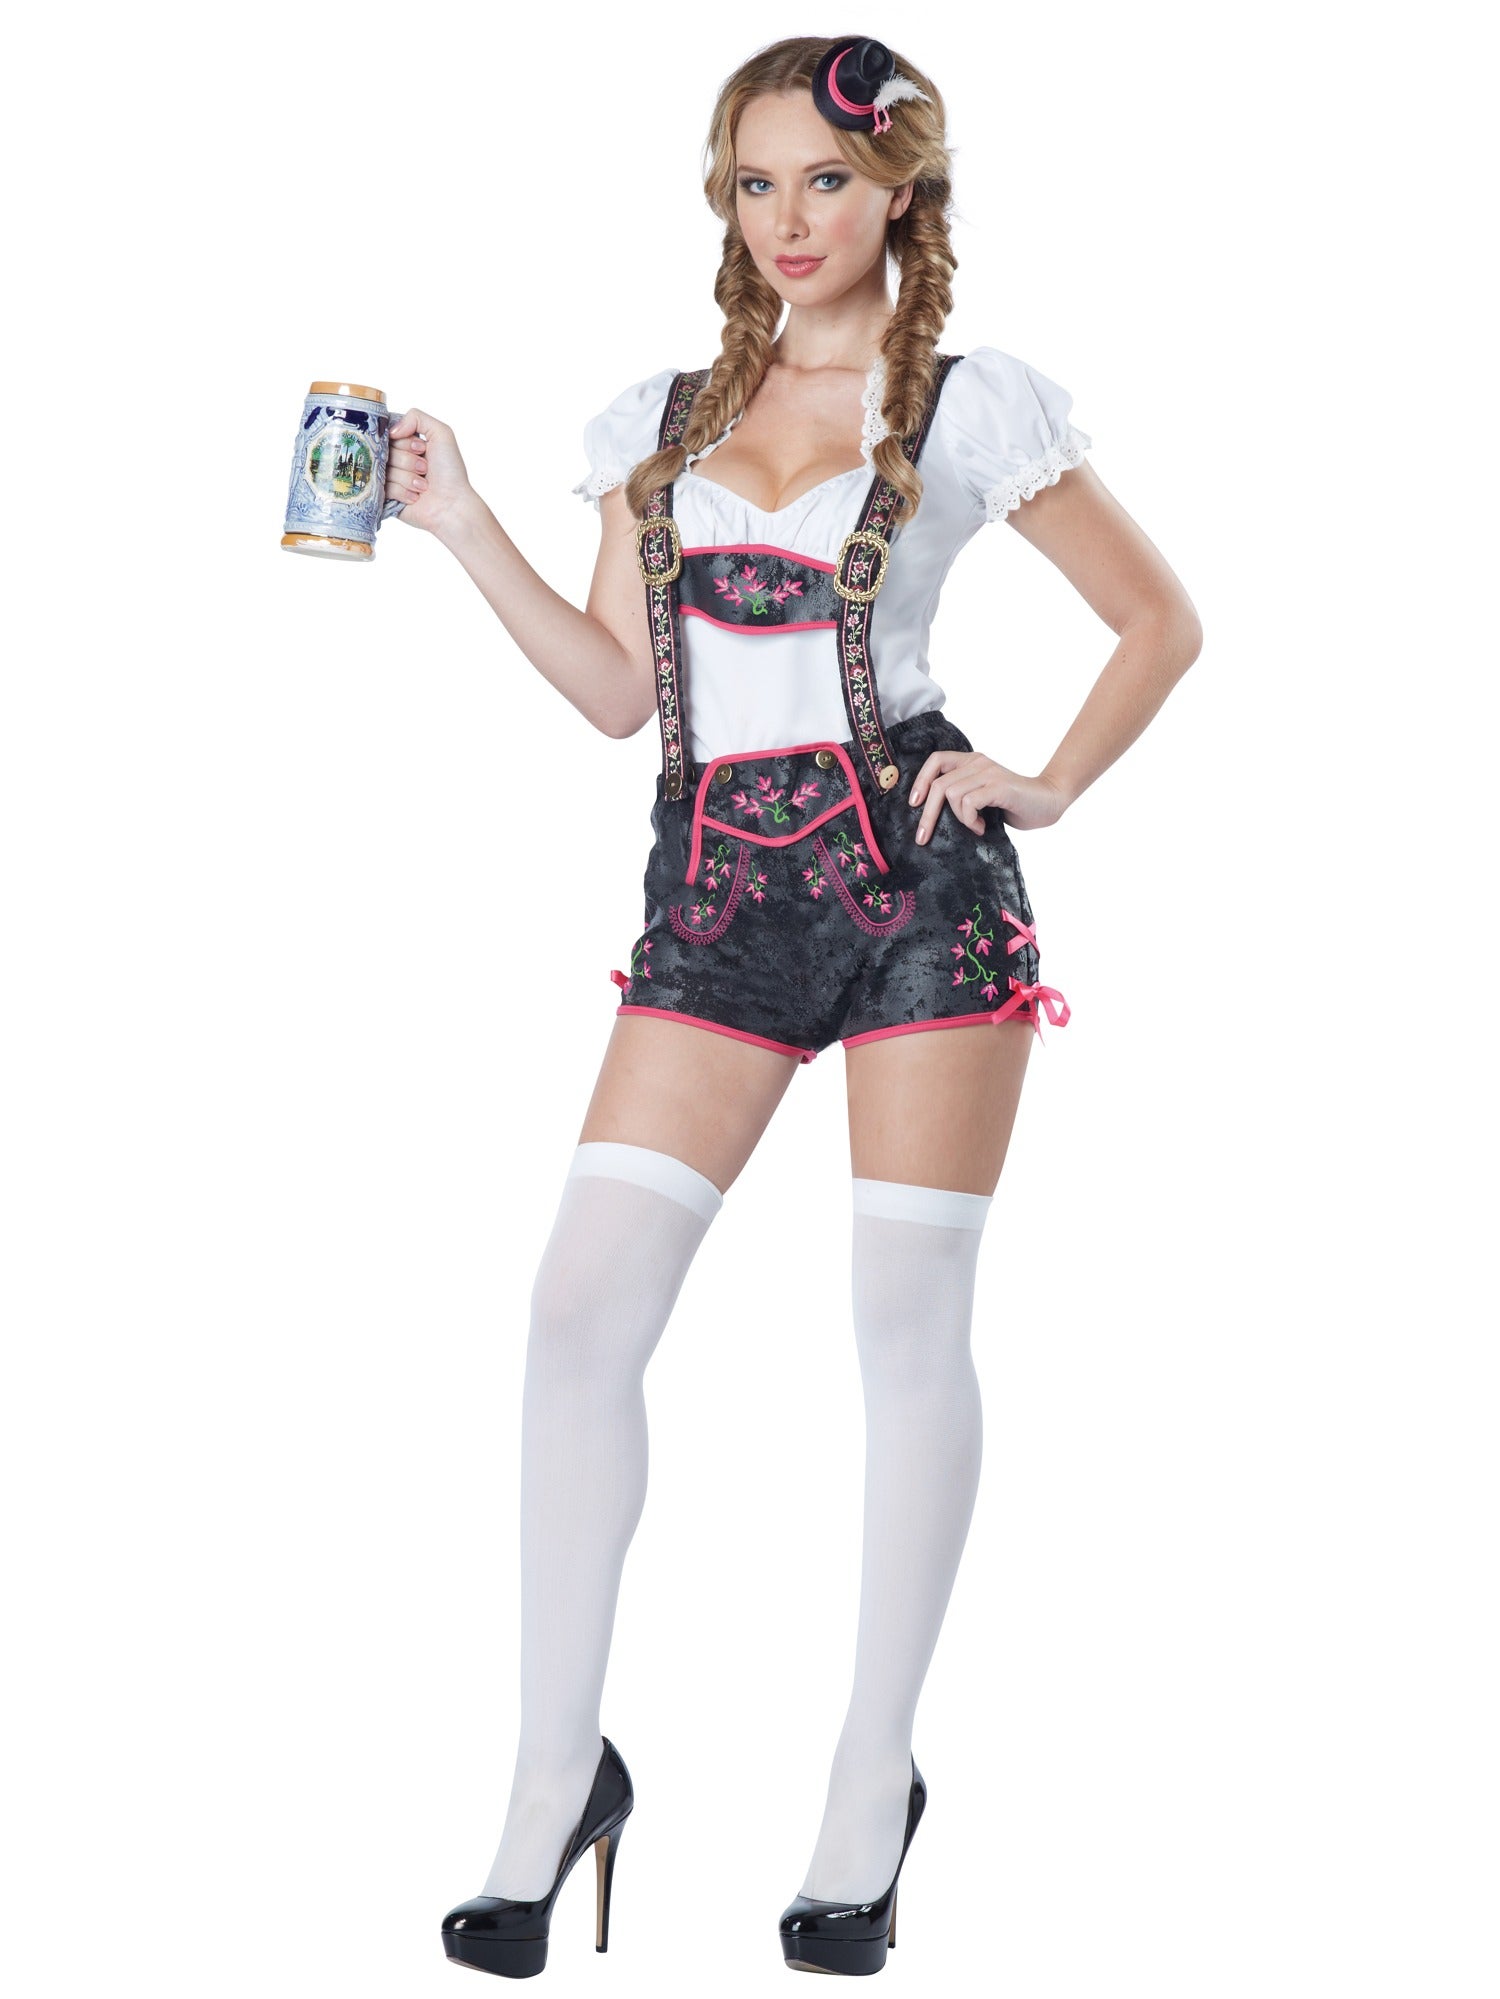 Hobbypos Flirty Lederhosen Beer Maid Tavern Bavarian Germany Oktoberfest Womens Costume